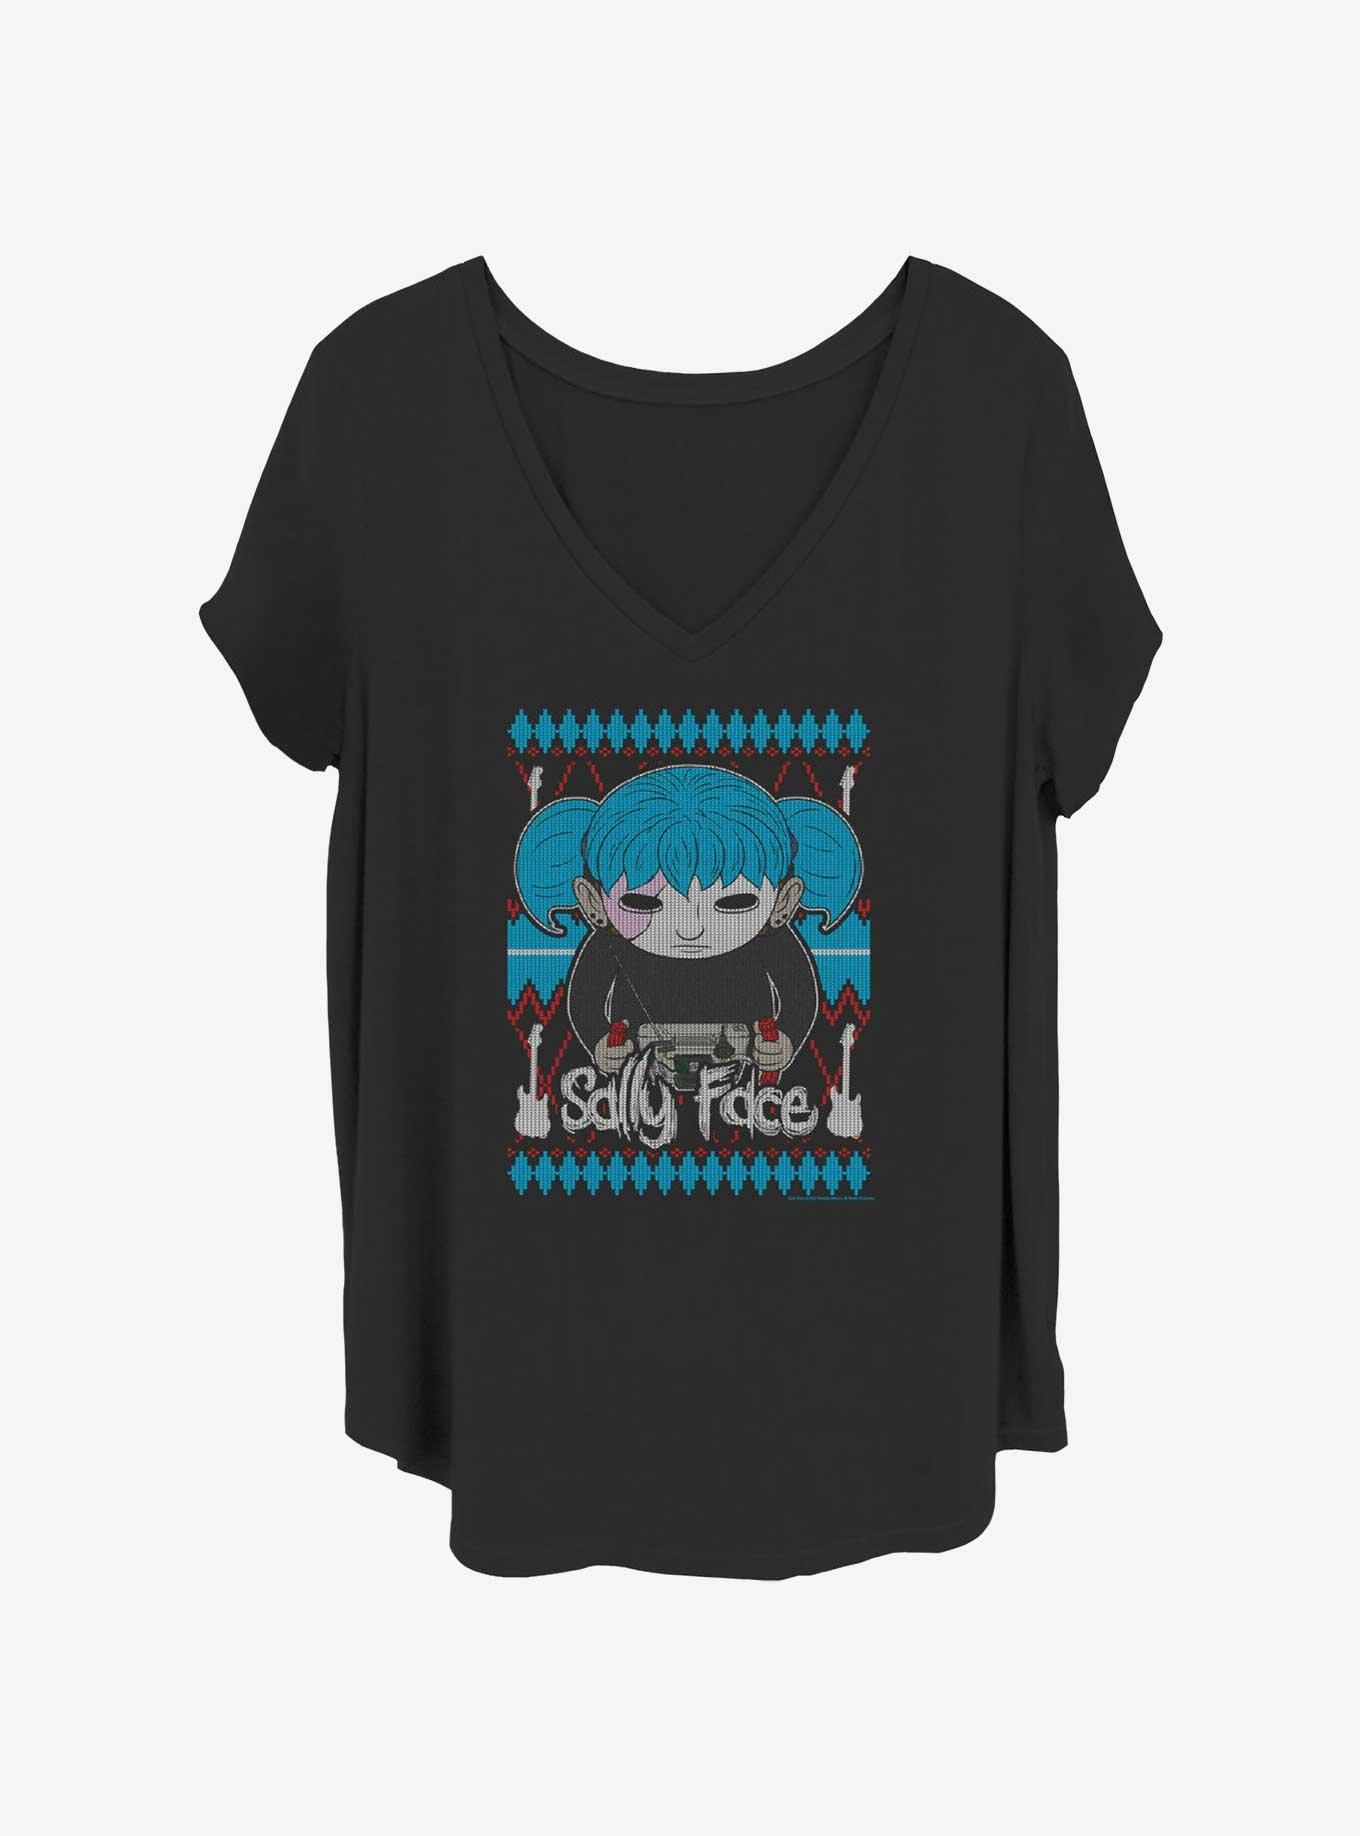 Sally Face Sweater Girls T-Shirt Plus Size, BLACK, hi-res